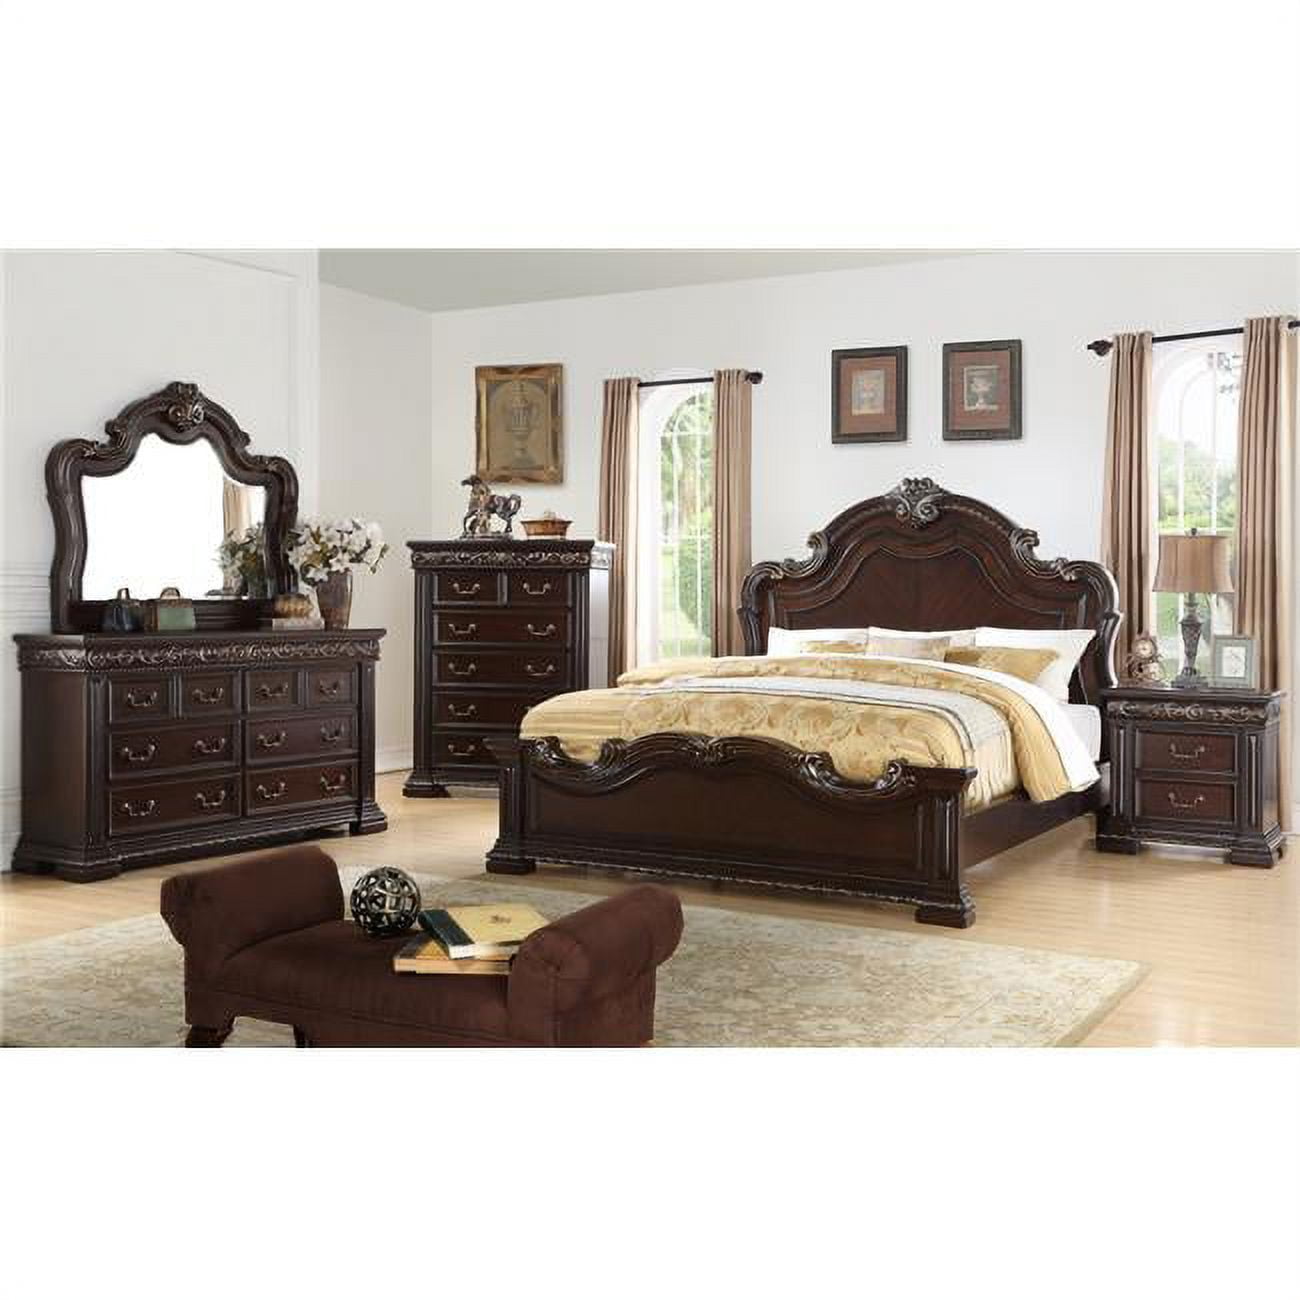 Picture of Best Master Furniture B1005 5PC California King Set Africa California Dark Cherry King Size Set - 5 Piece